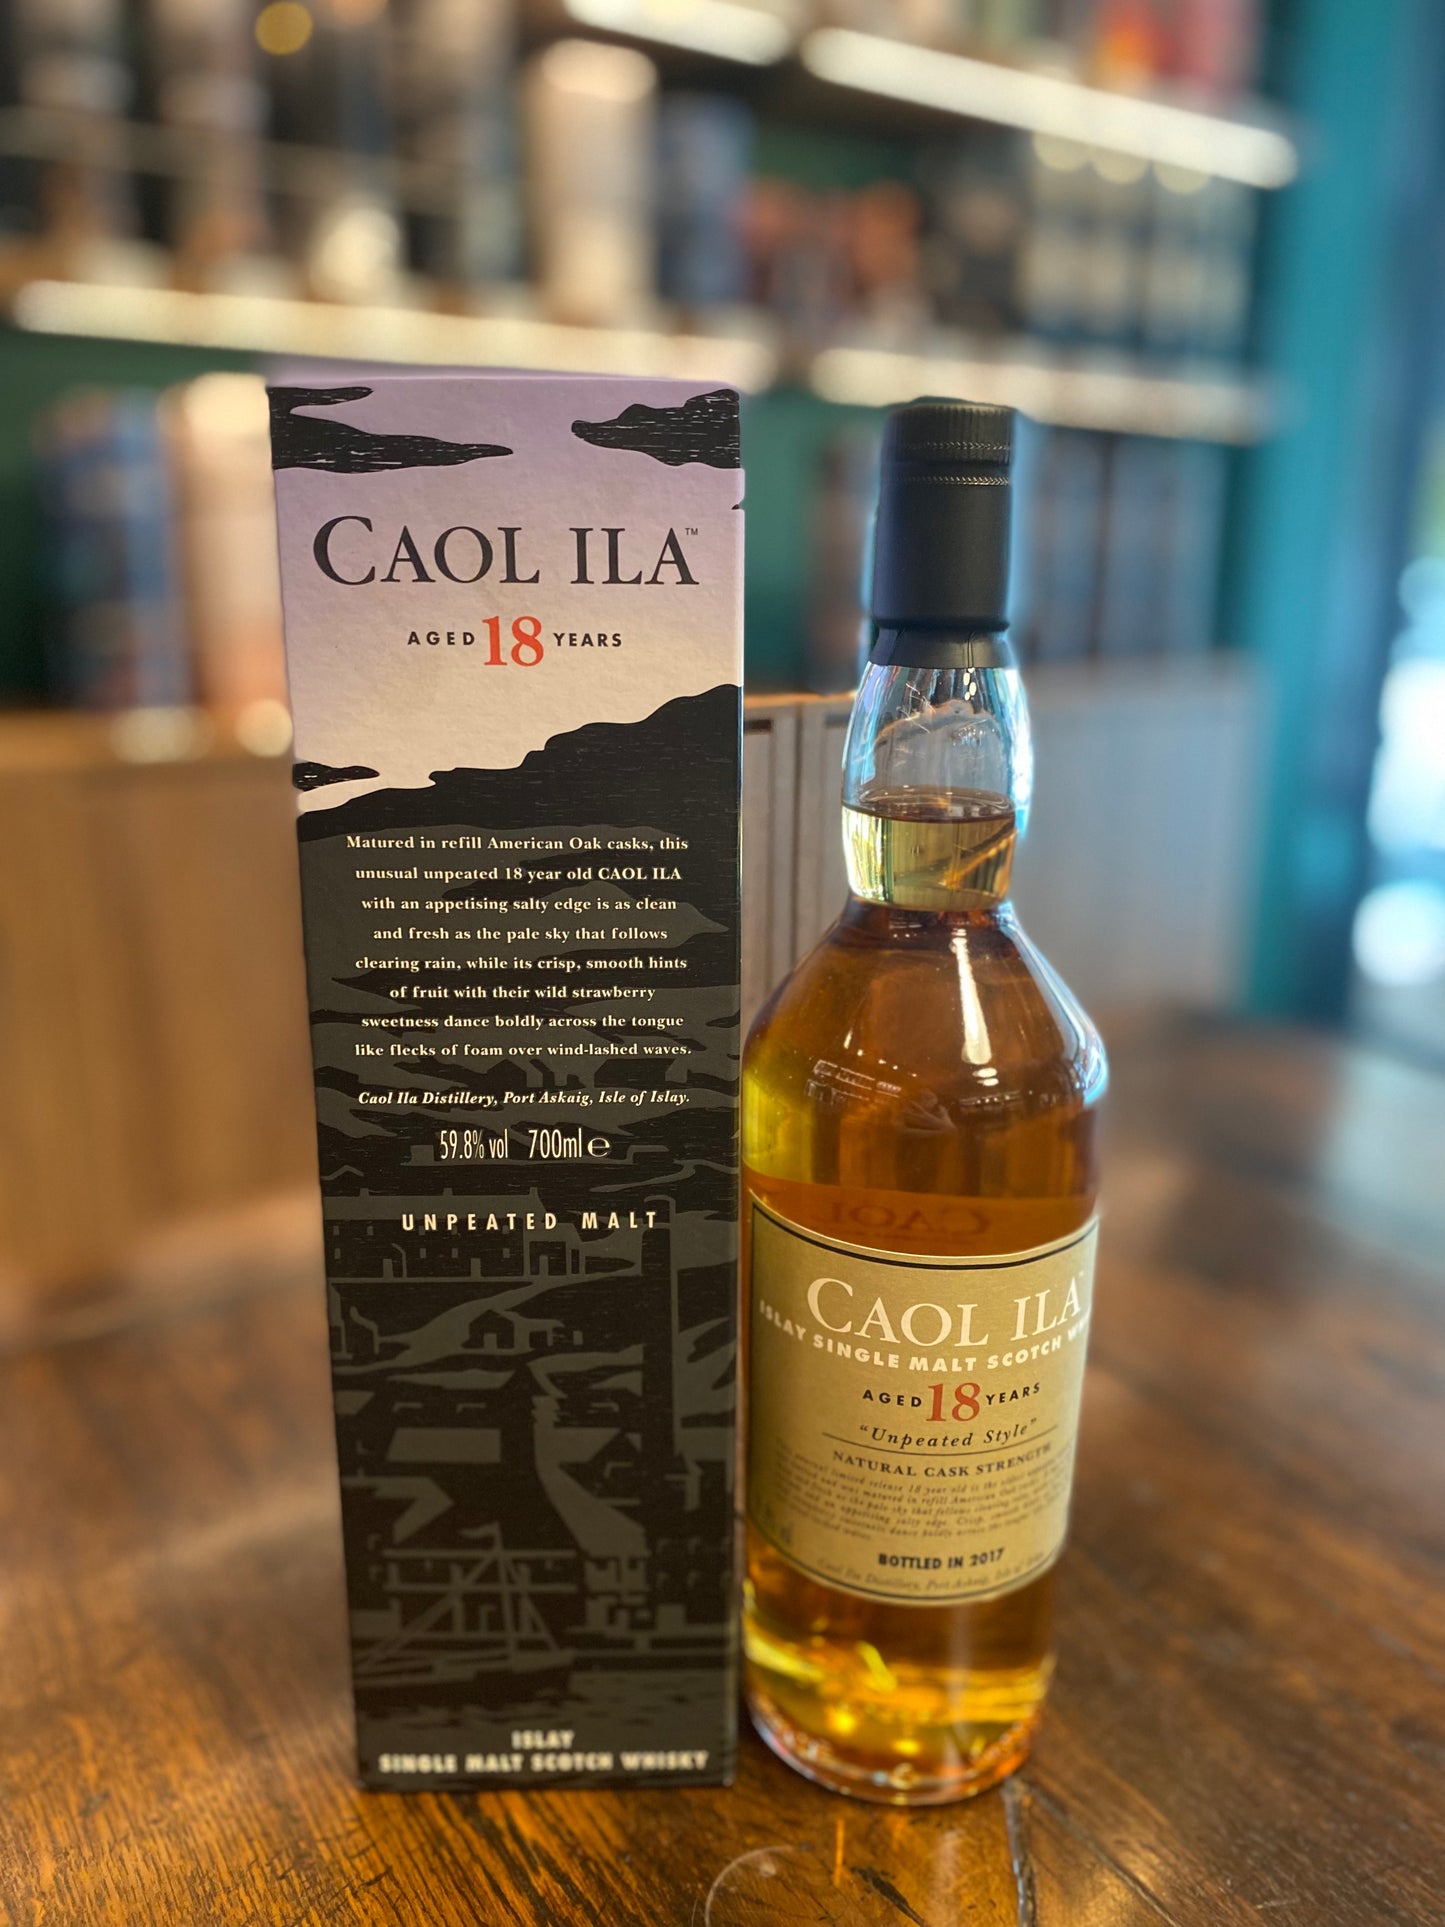 Caol ila 18 Year Old Unpeated Single Malt Scotch Whisky,700ml,59.8%